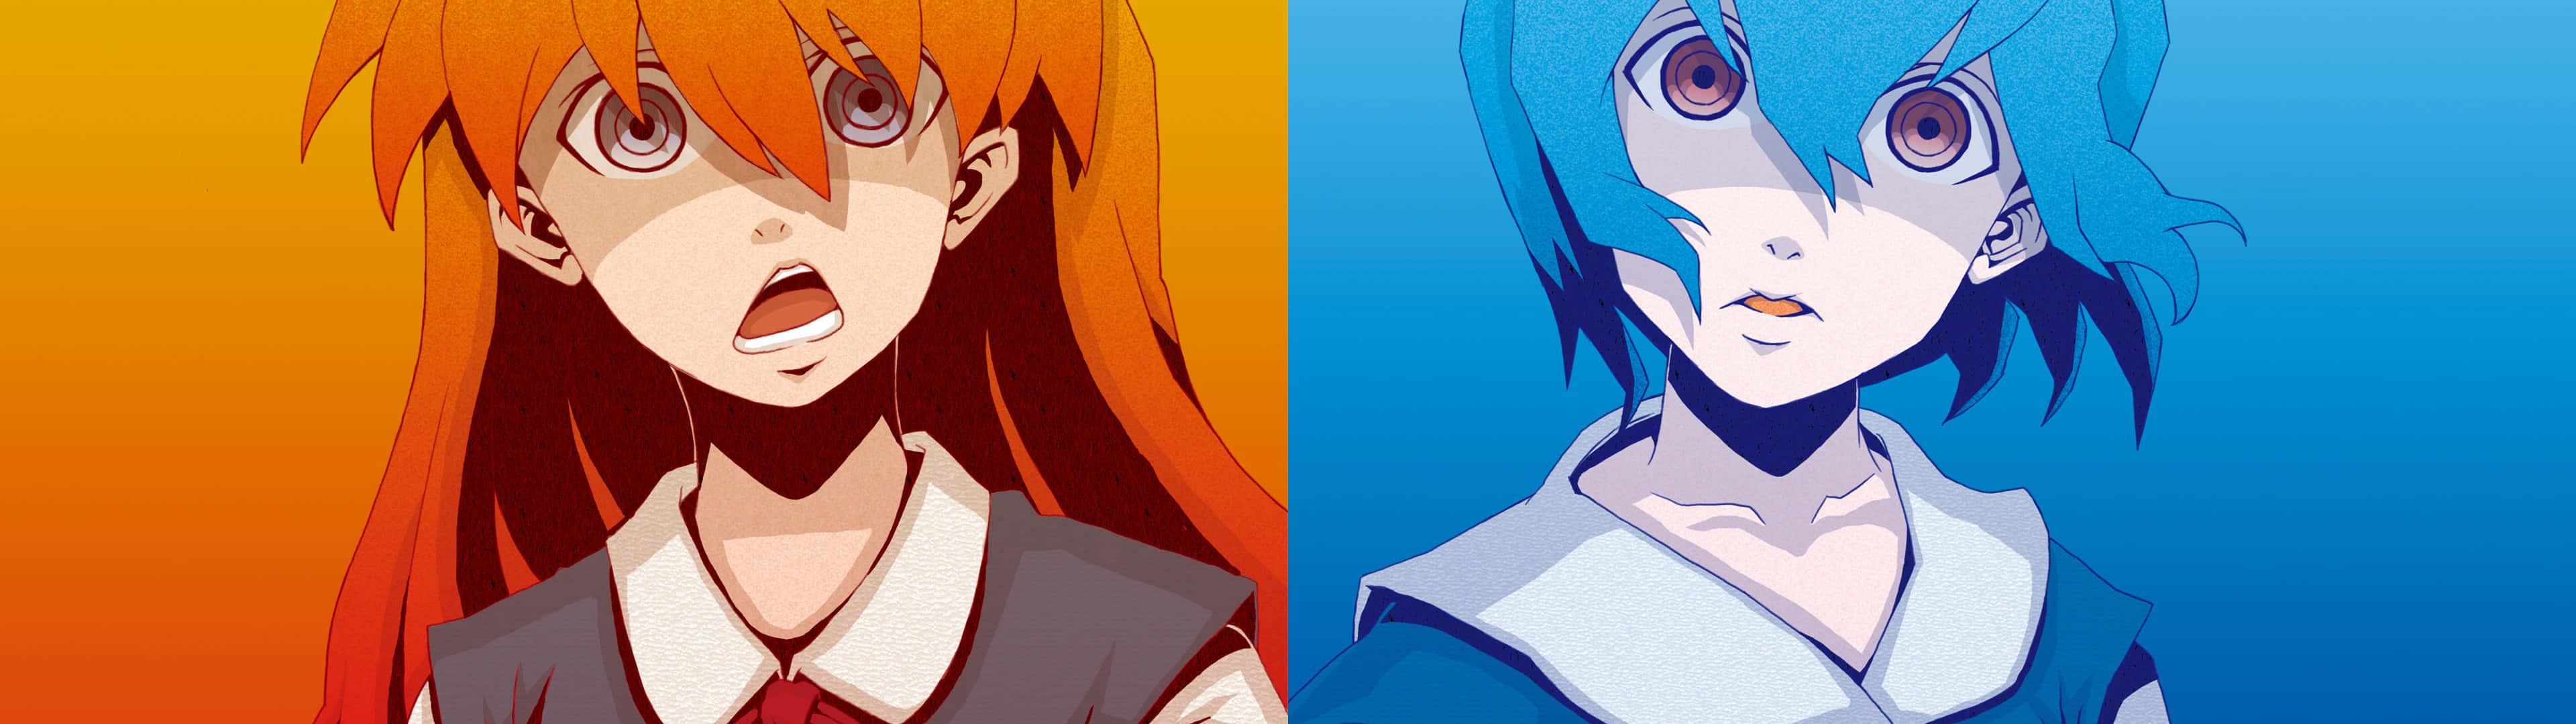 Download Neon Genesis Evangelion Girls 3840x1080 Anime Wallpaper